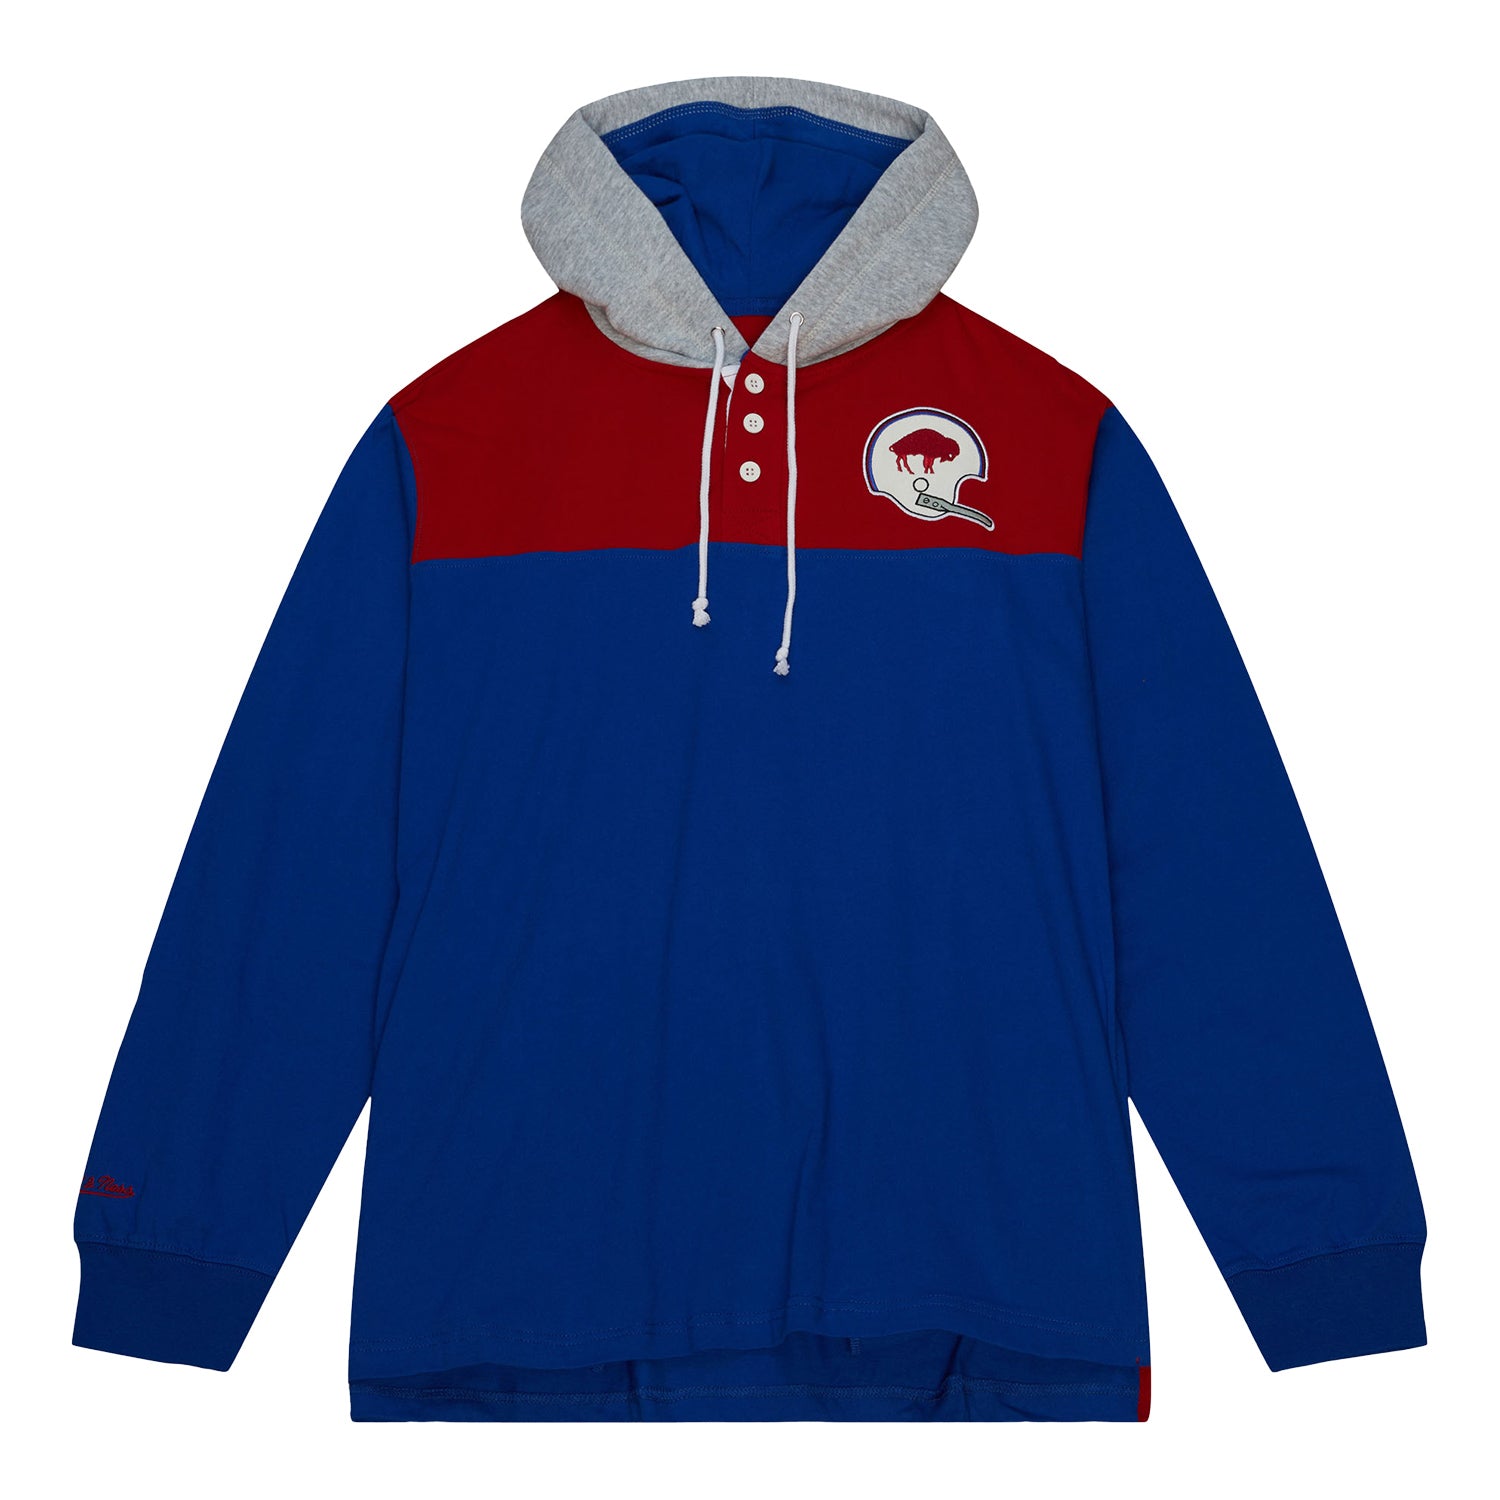 Buffalo Blue Jays Sweatshirt/Hoodie